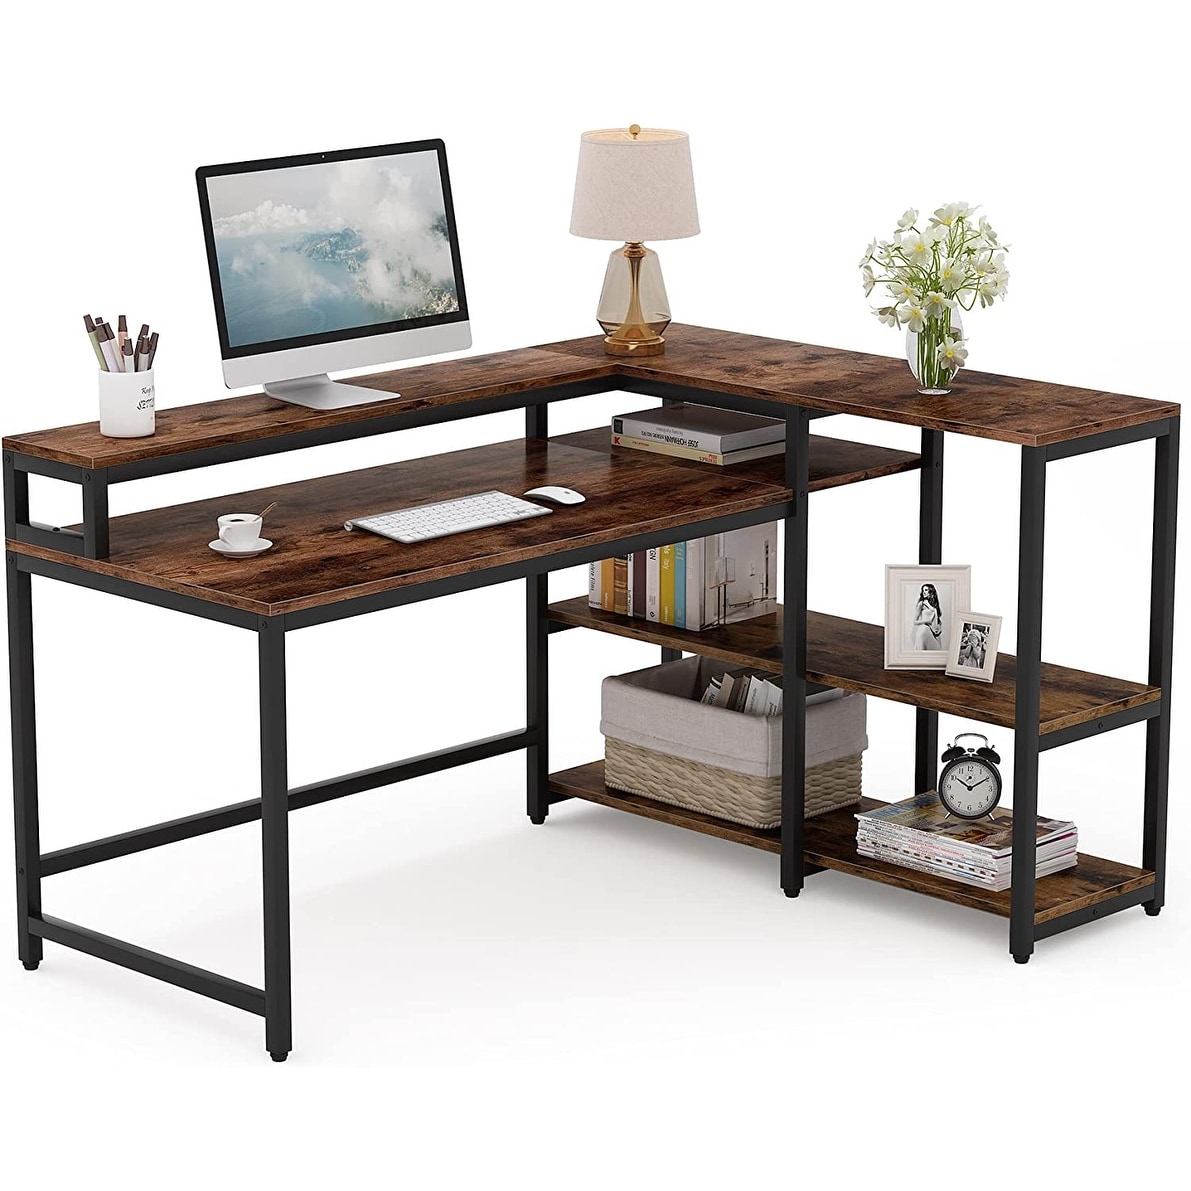 https://ak1.ostkcdn.com/images/products/is/images/direct/d0db2725c3a4970c08a07a45f2b02cead052de1d/55-Inch-Reversible-L-Shaped-Desk-with-Storage-Shelf%2C-Corner-Desk-for-Home-Office.jpg